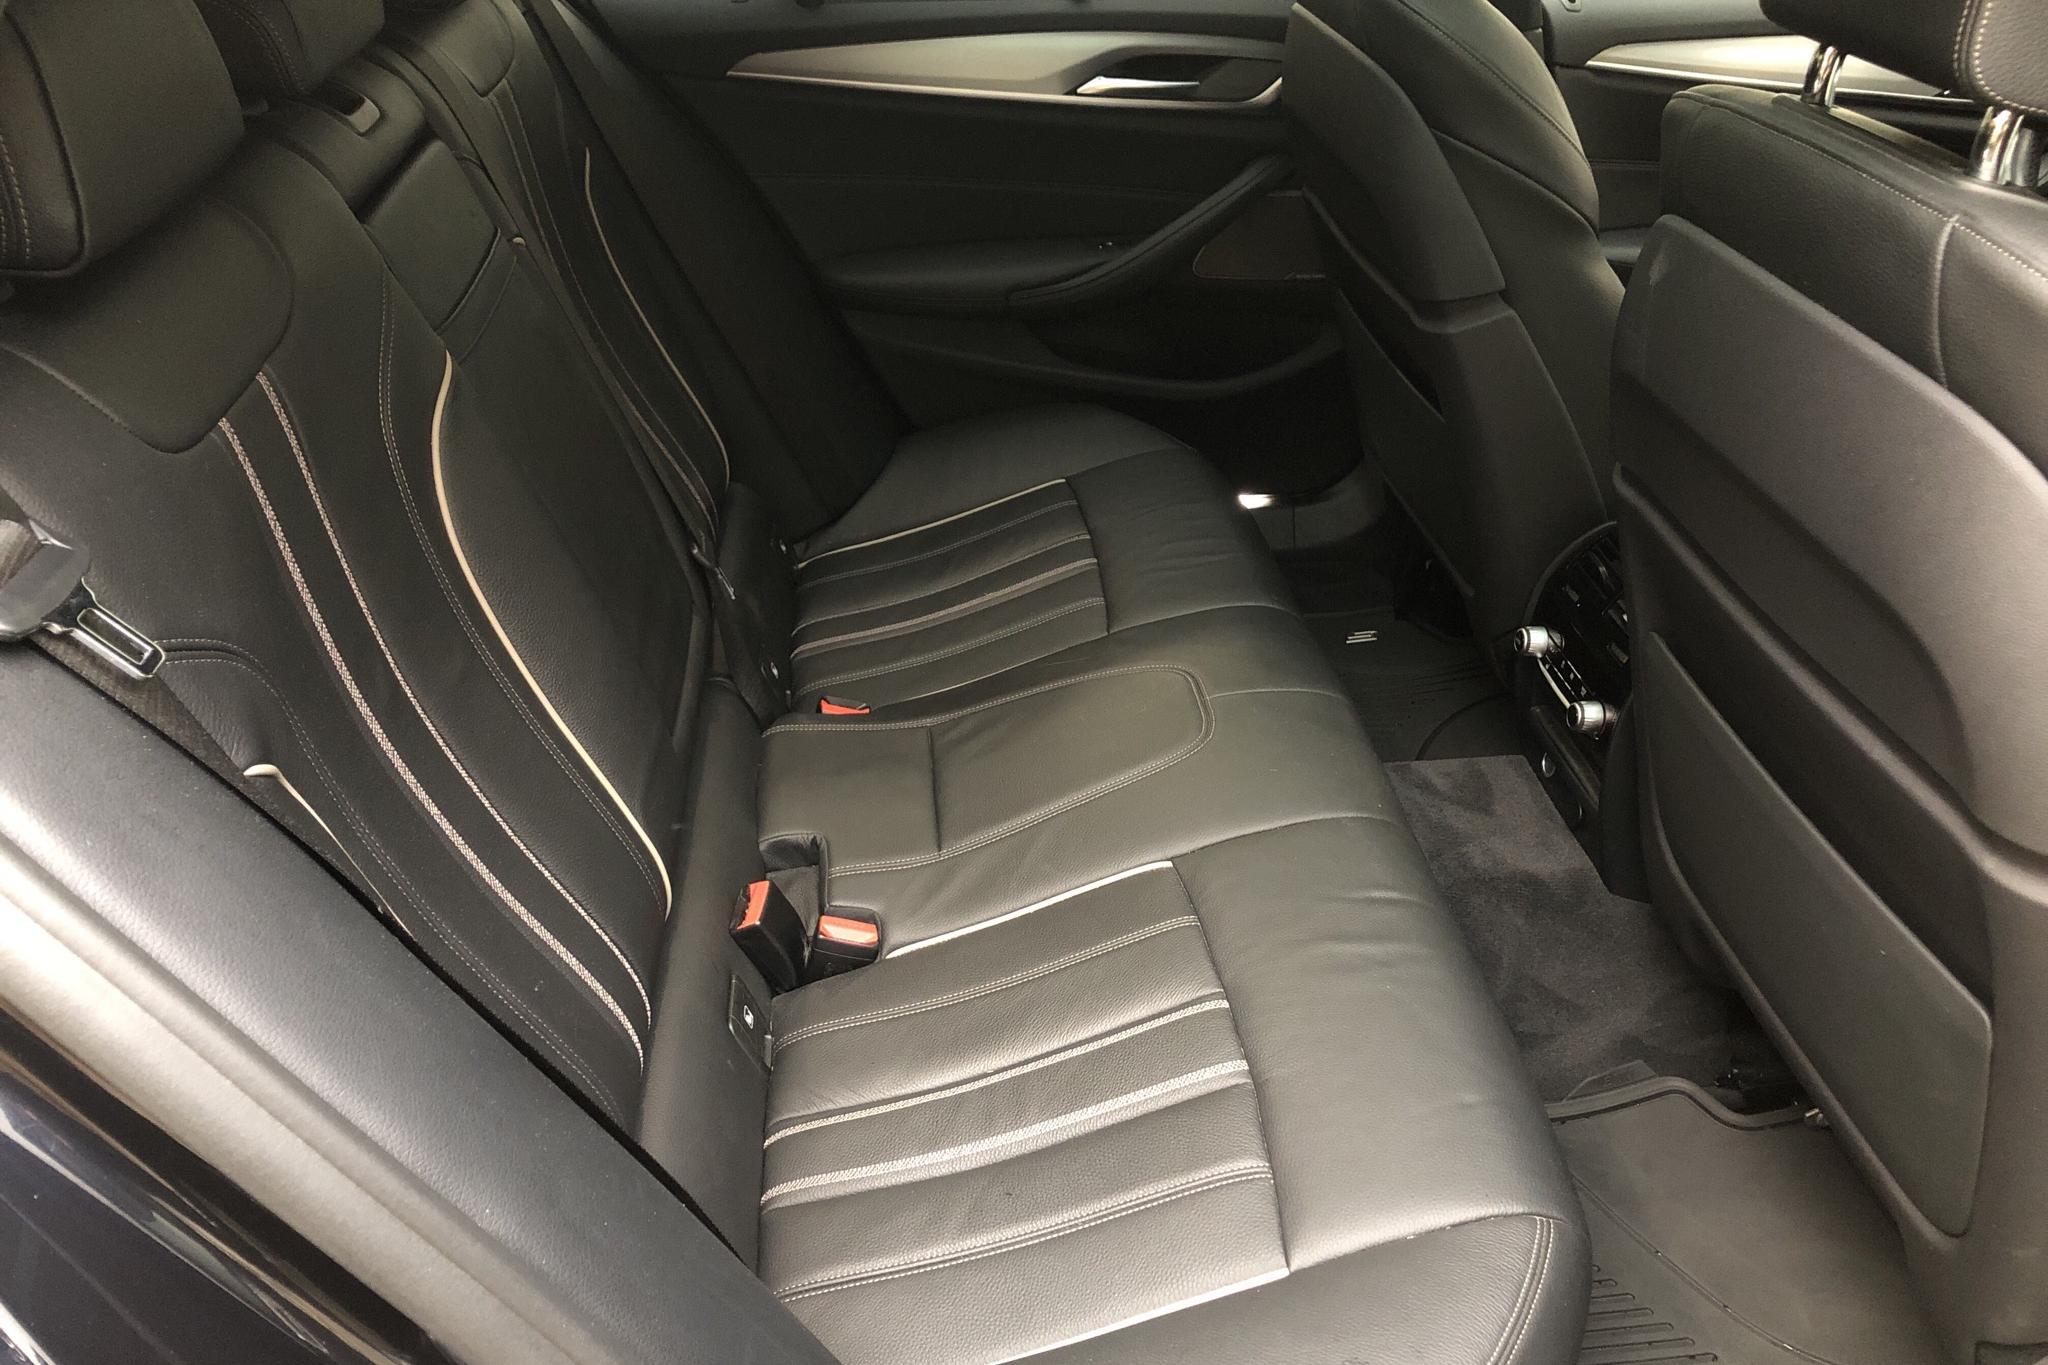 BMW 530i xDrive Touring, G31 (252hk) - 74 090 km - Automatic - black - 2018